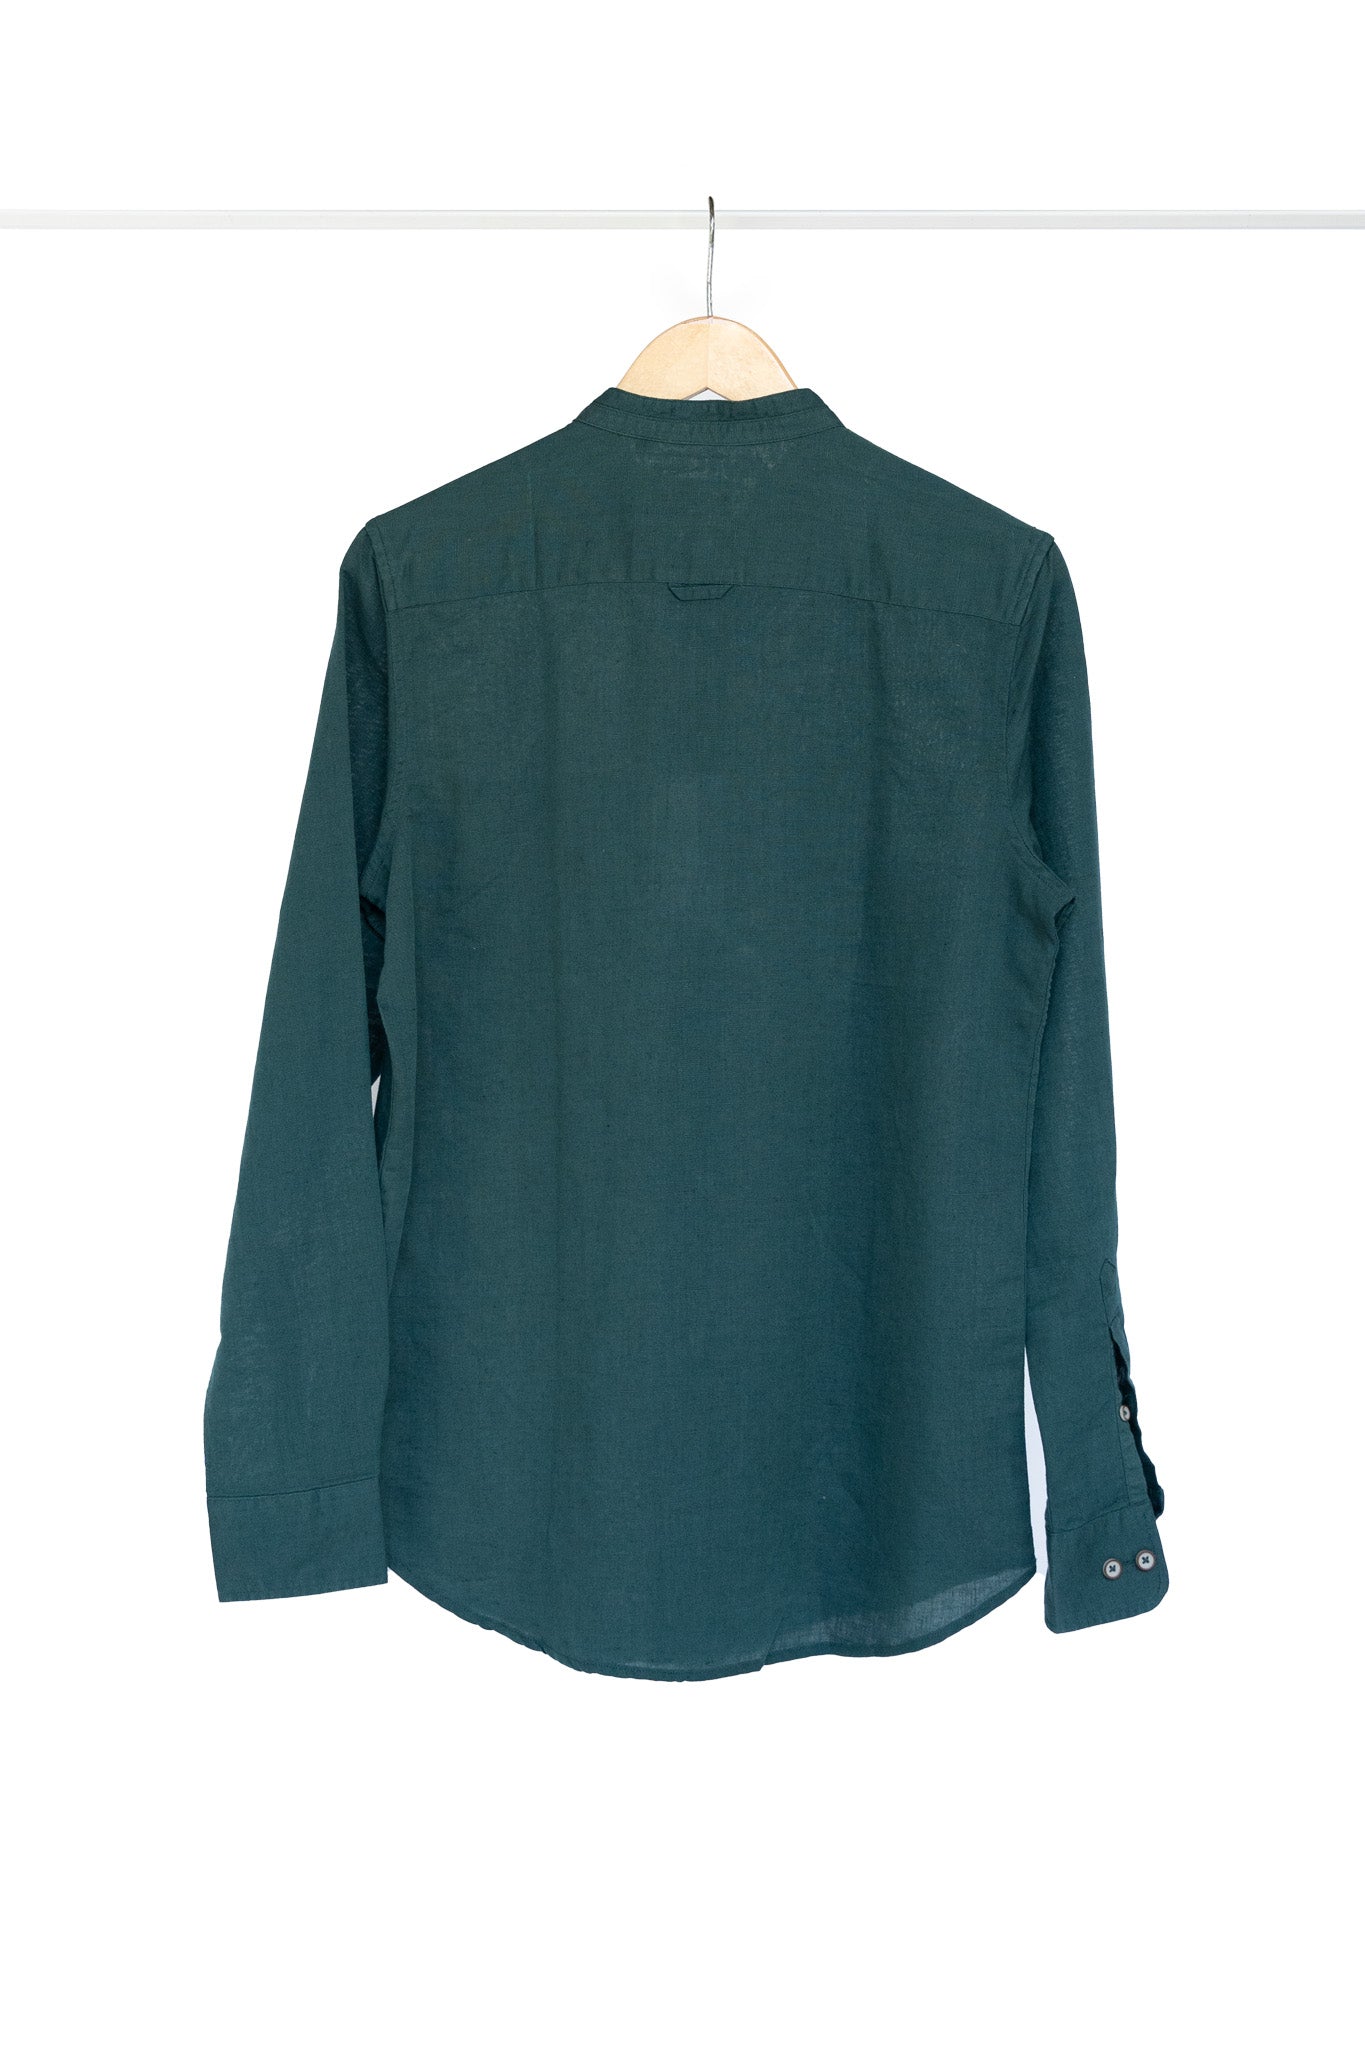 Bare Brown Mandarin Collar Cotton Linen Shirt, Slim Fit with Full Sleeves - Dark Green